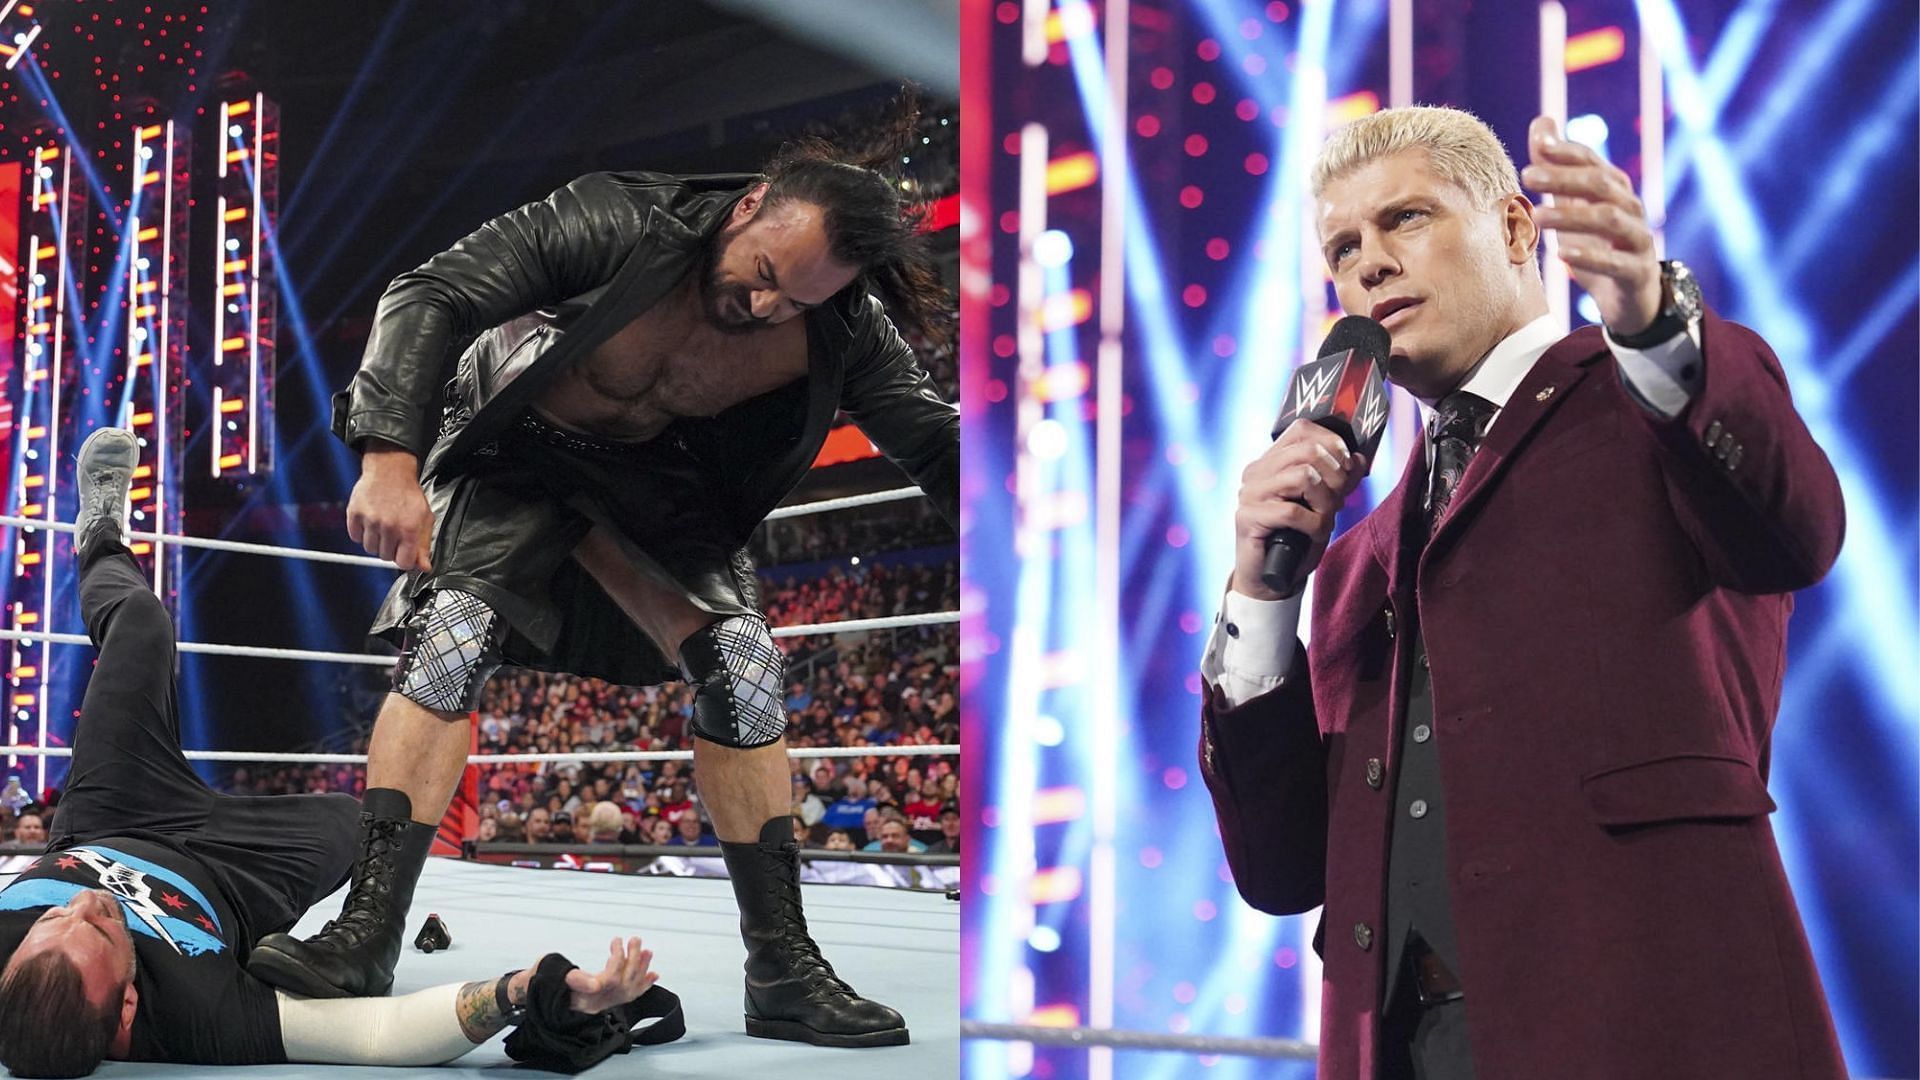 Drew McIntyre brutally attacked CM Punk on RAW